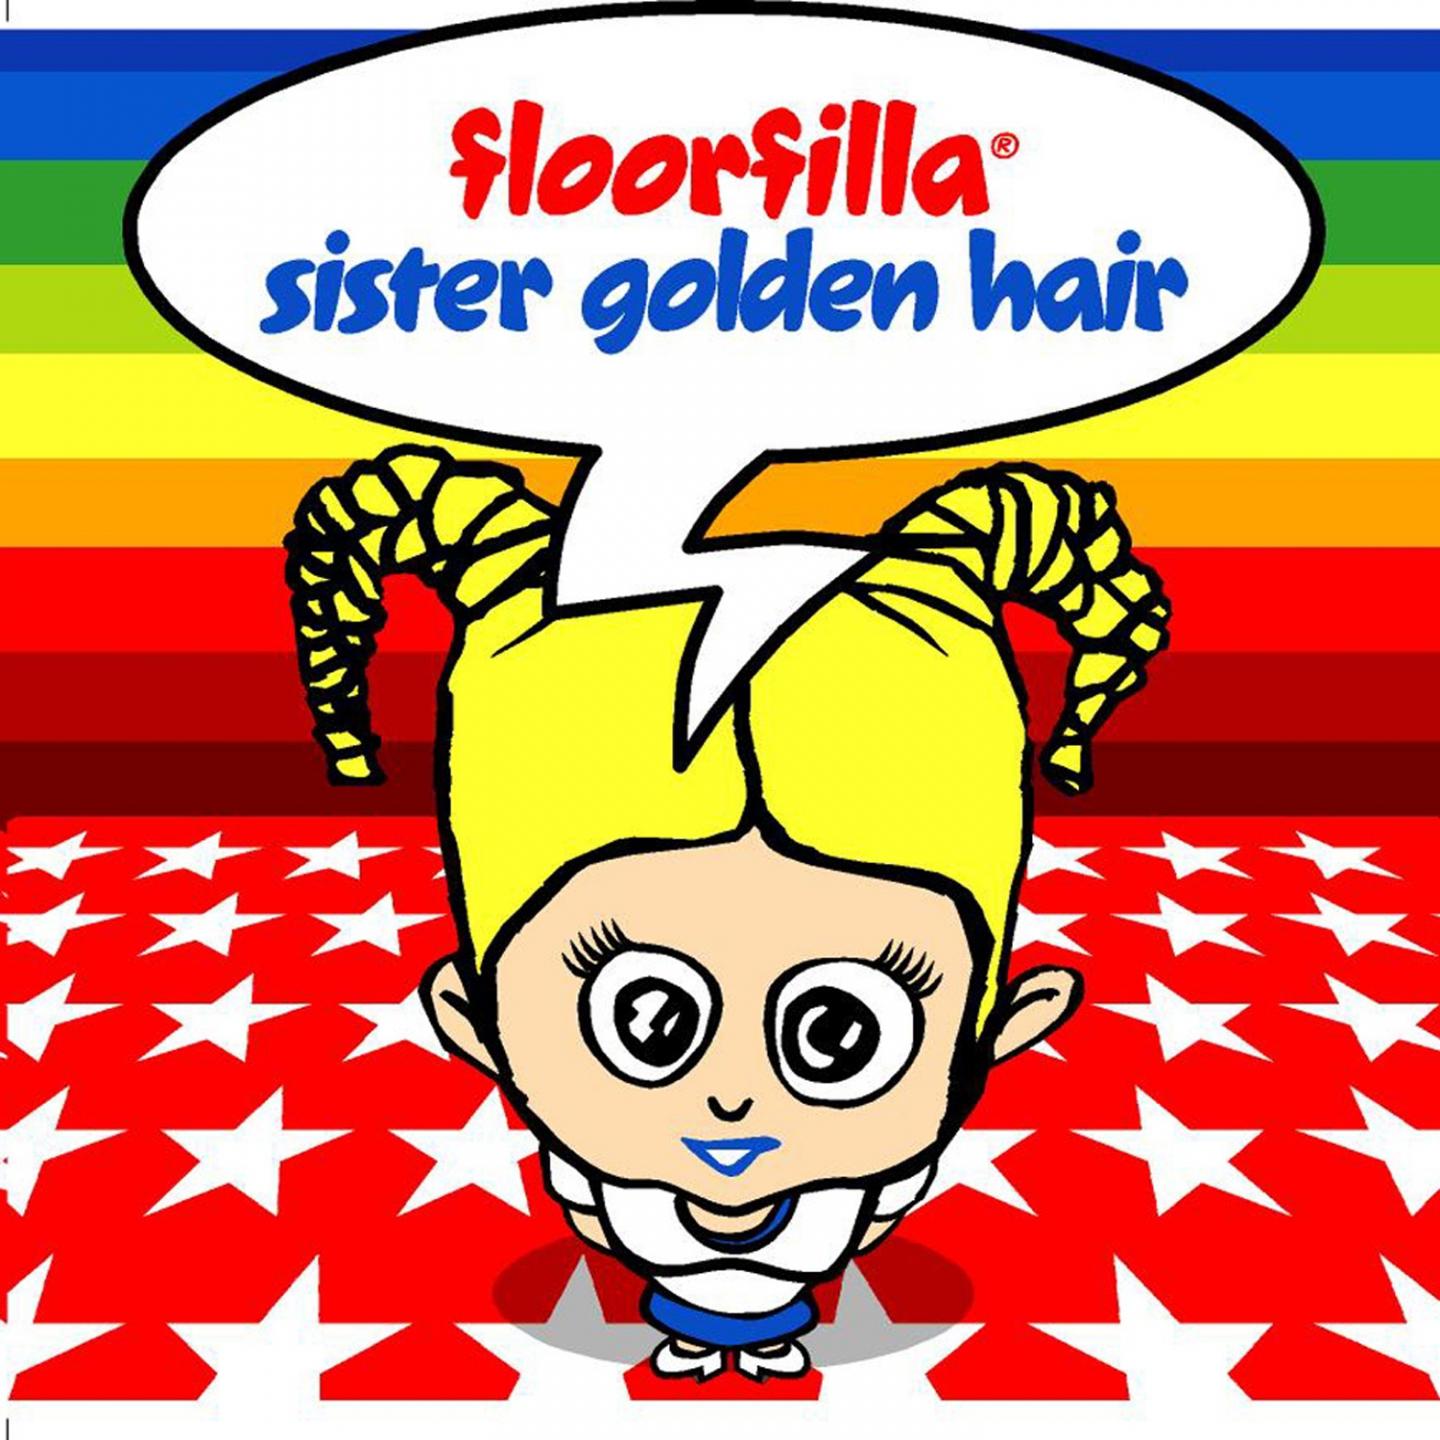 Sister Golden Hair (Momomix)